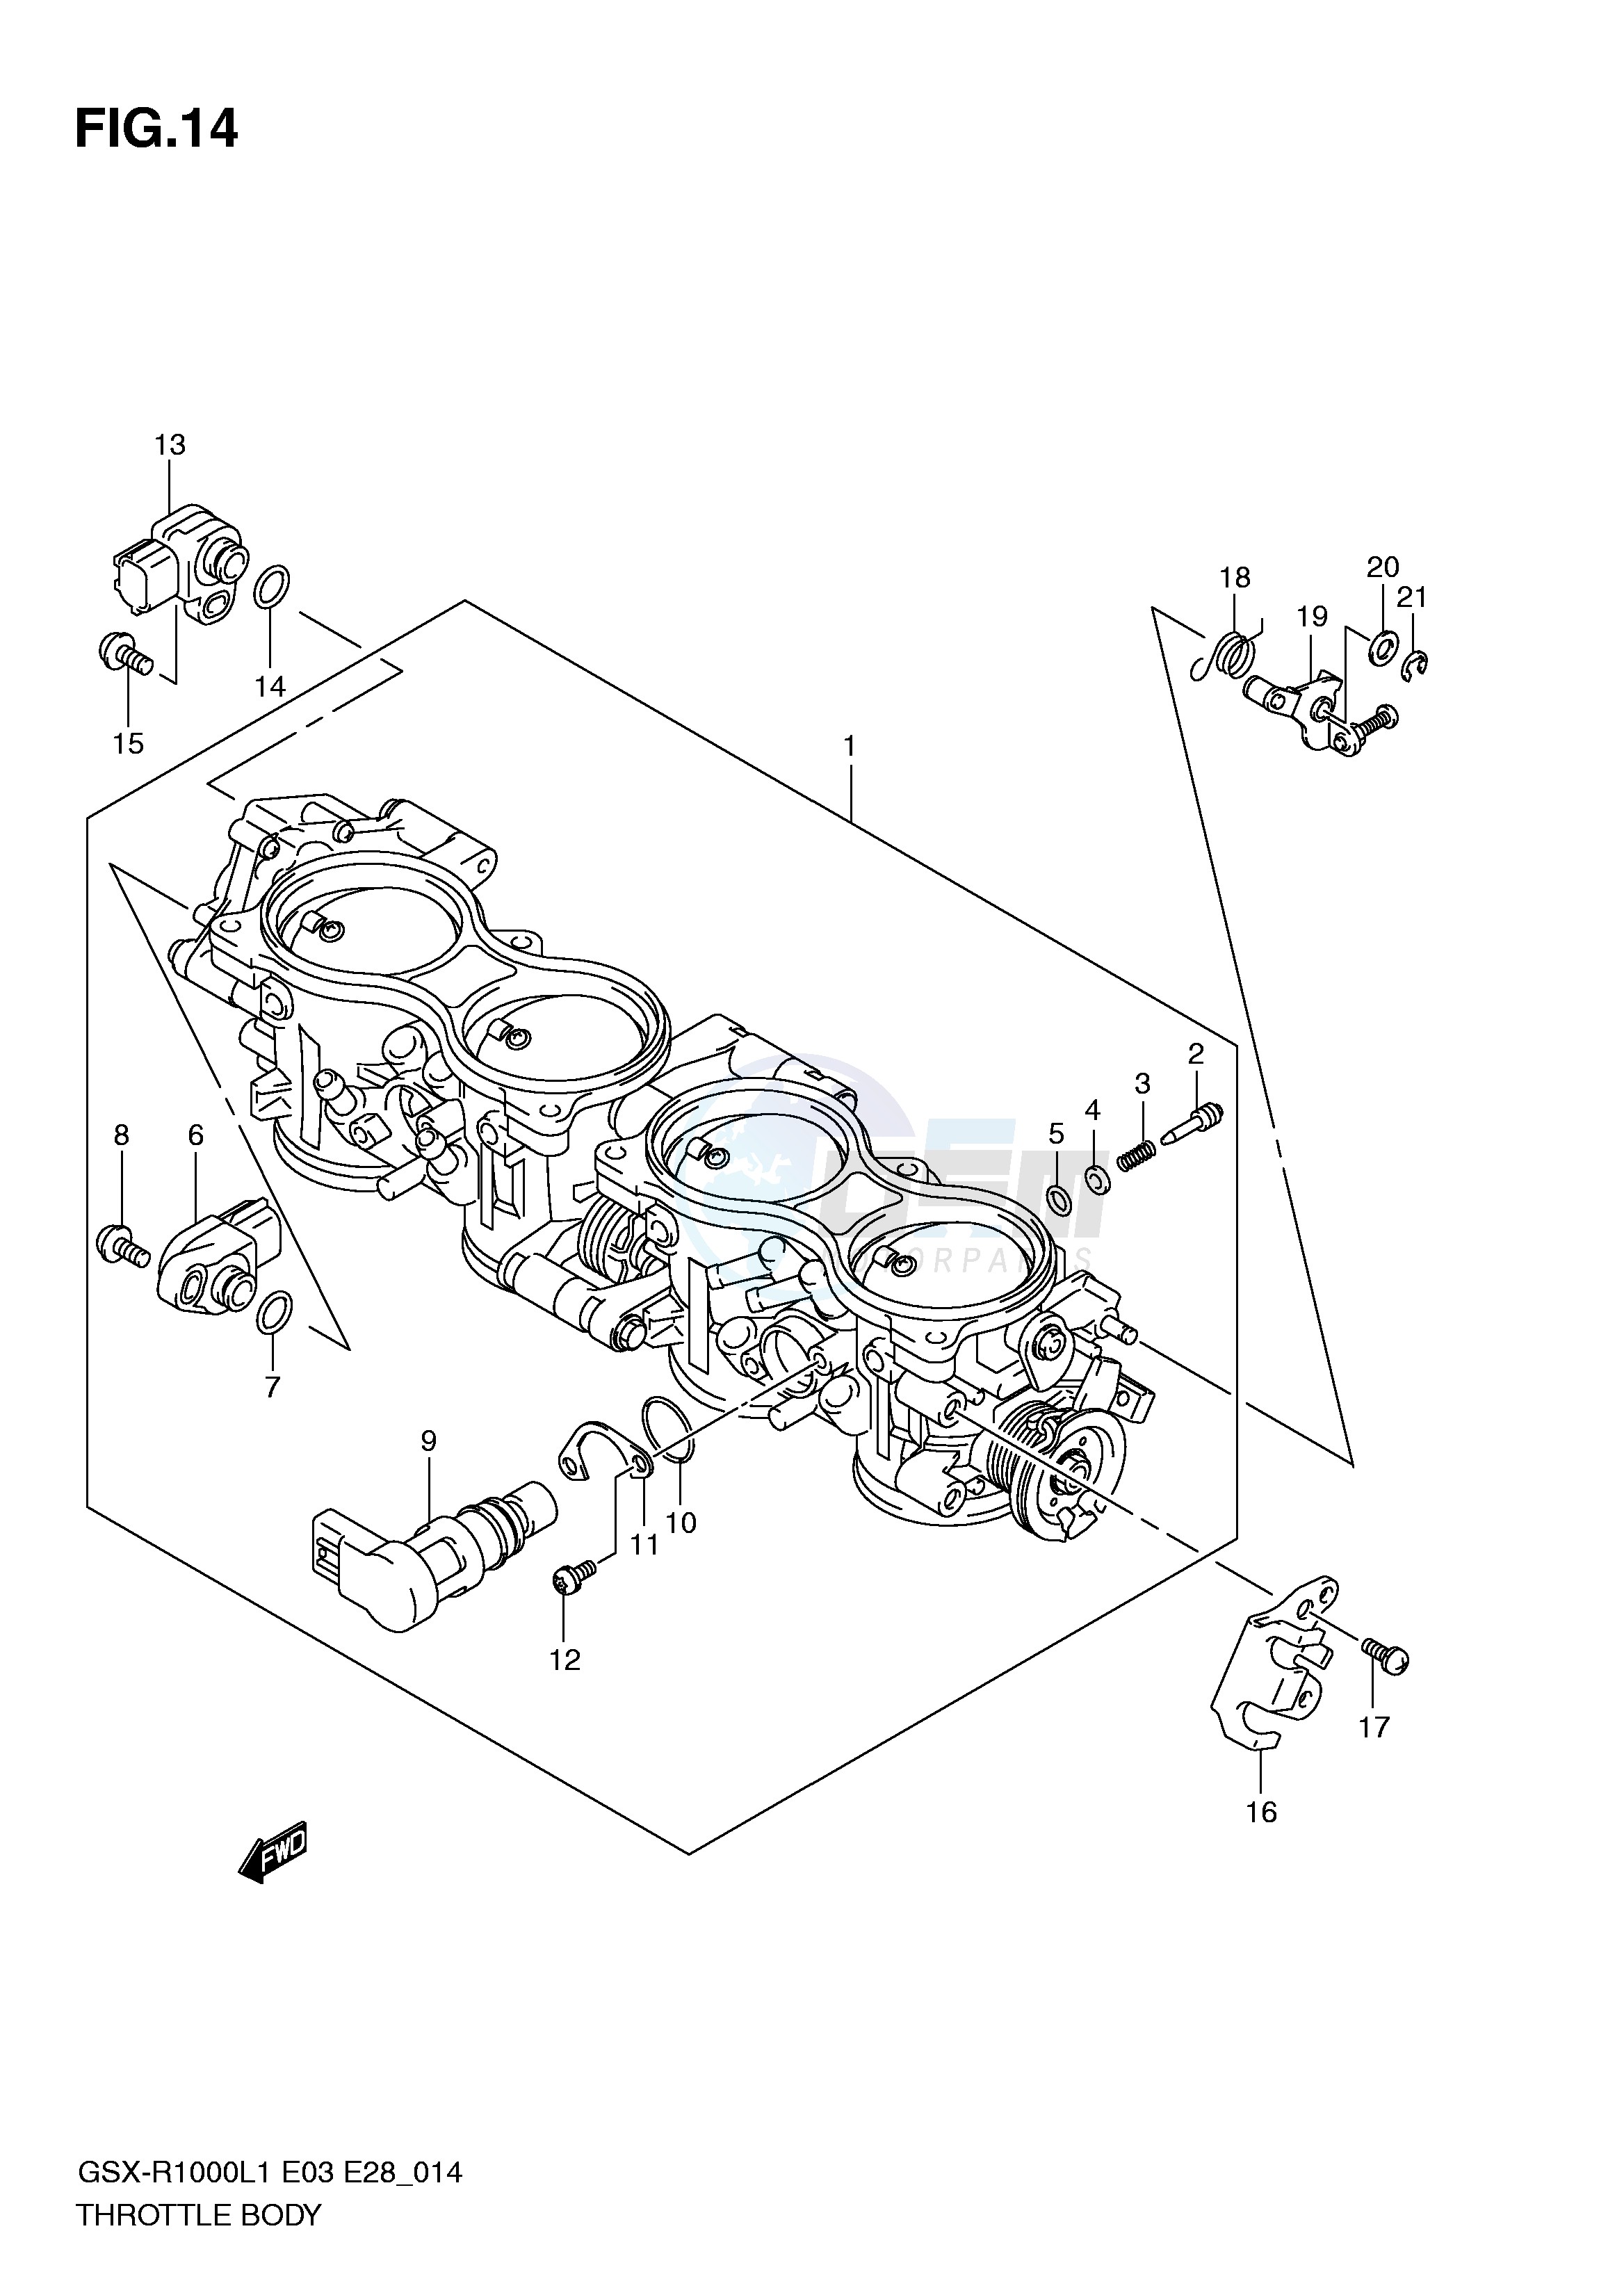 THROTTLE BODY (GSX-R1000L1 E33) blueprint